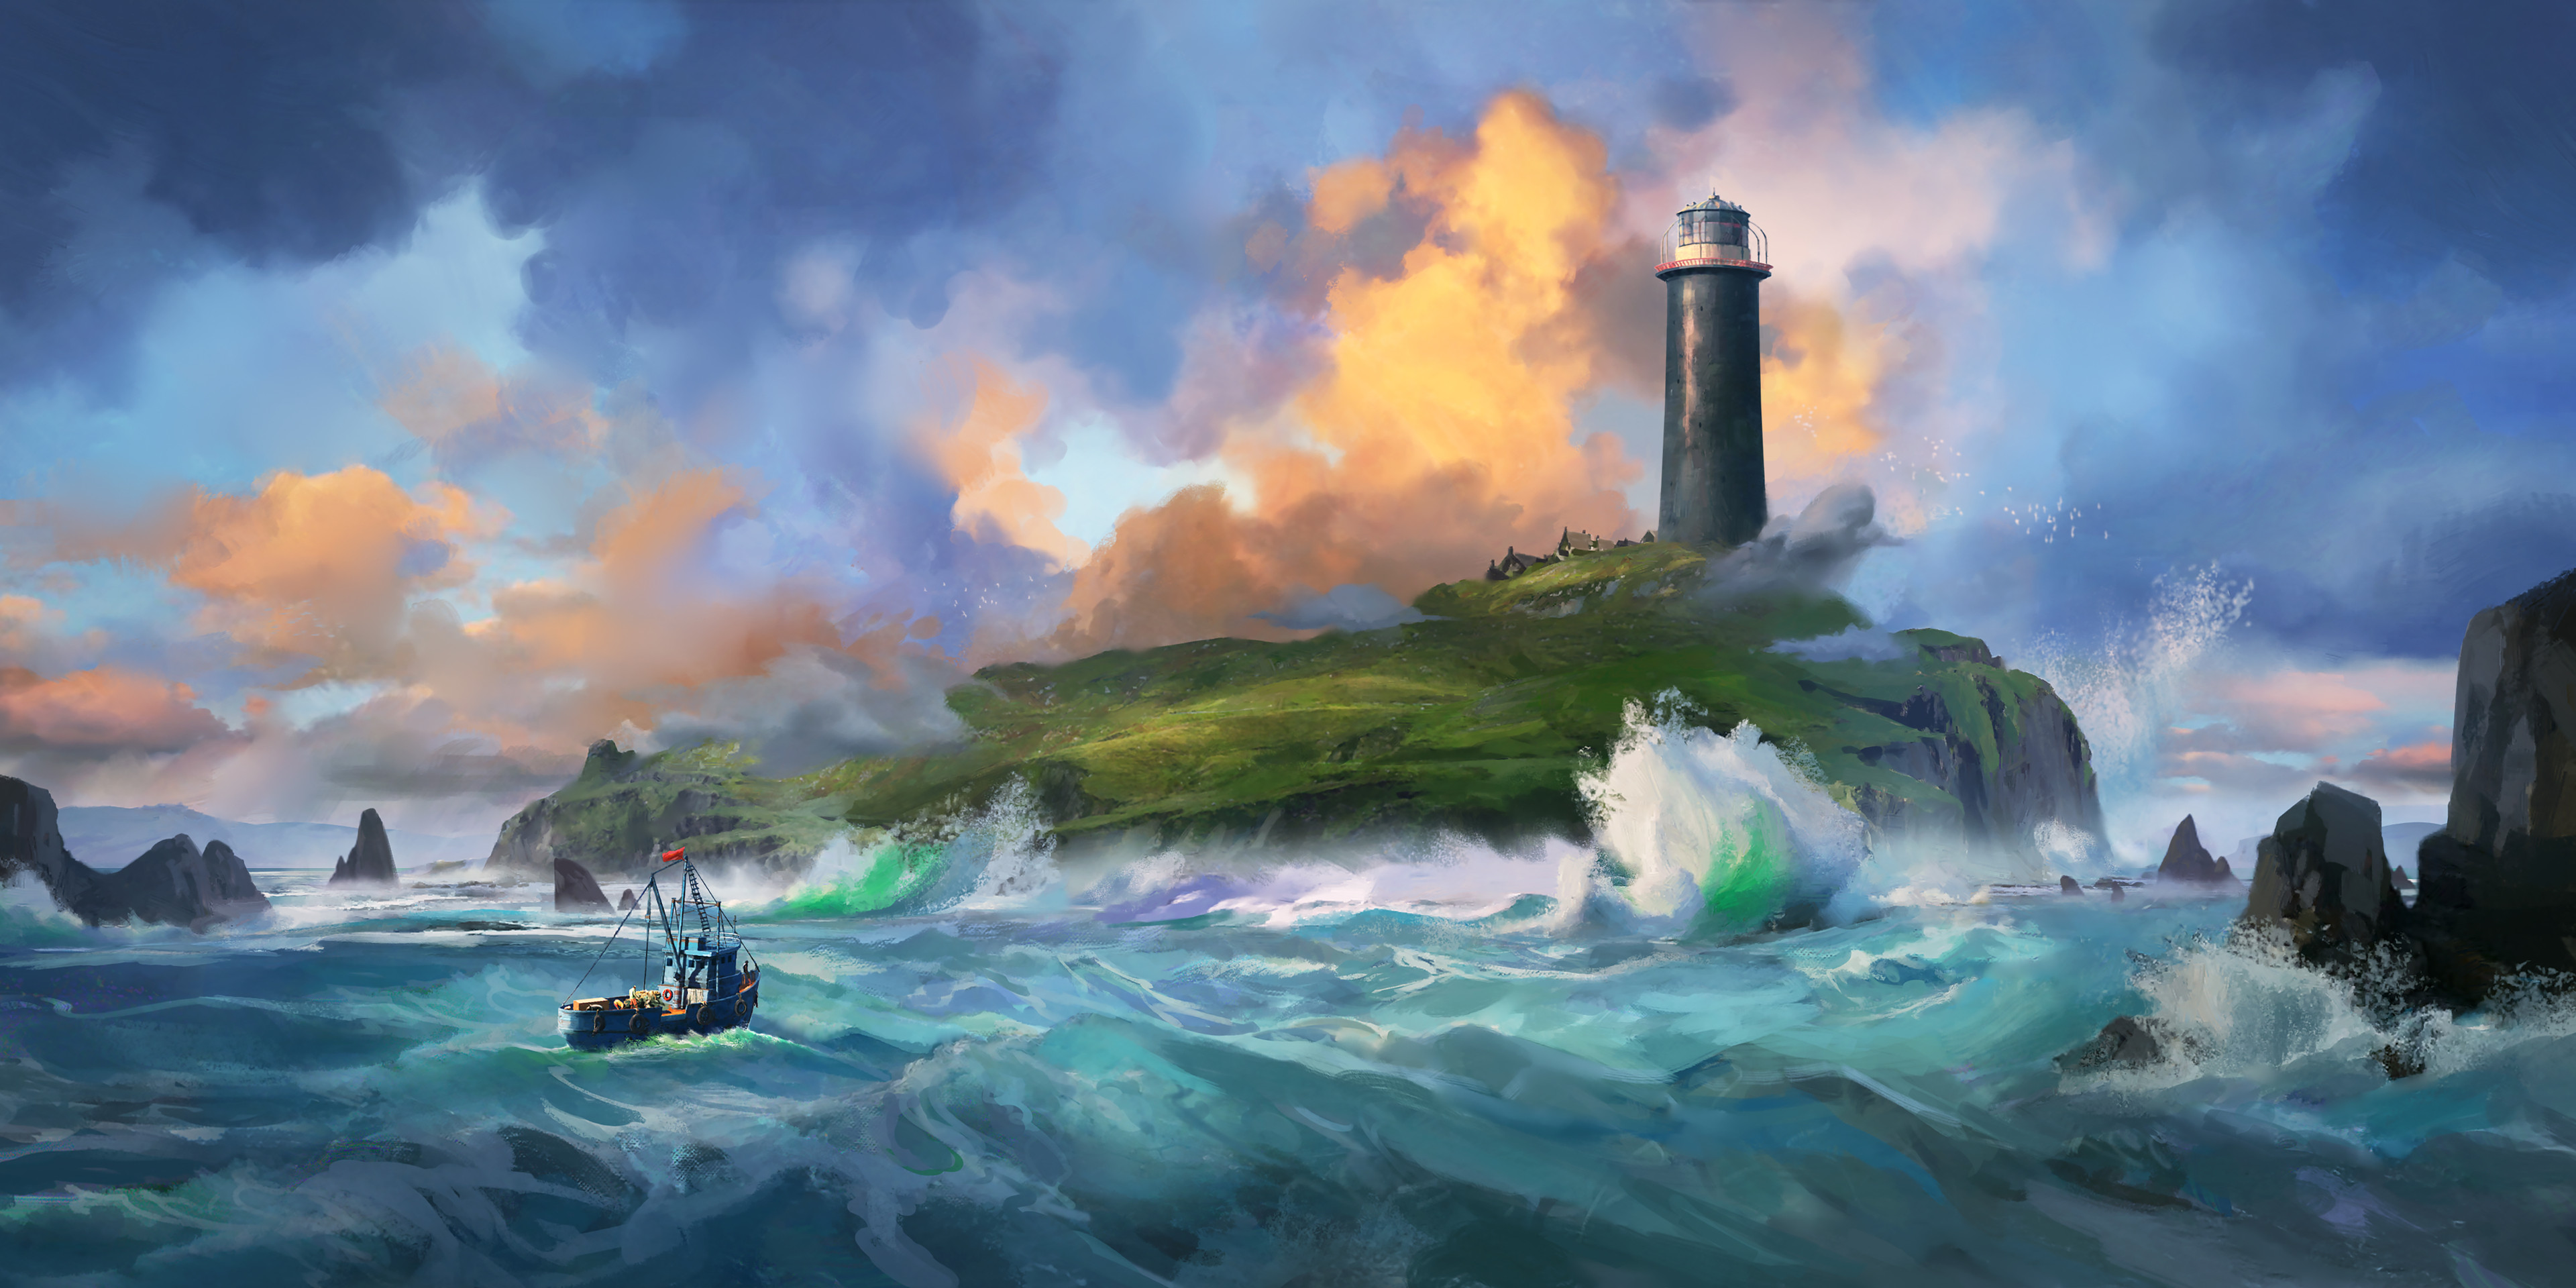 General 3840x1920 Gavin O'Donnell digital art artwork illustration environment clouds waves lighthouse boat sea water island landscape sky Dredge